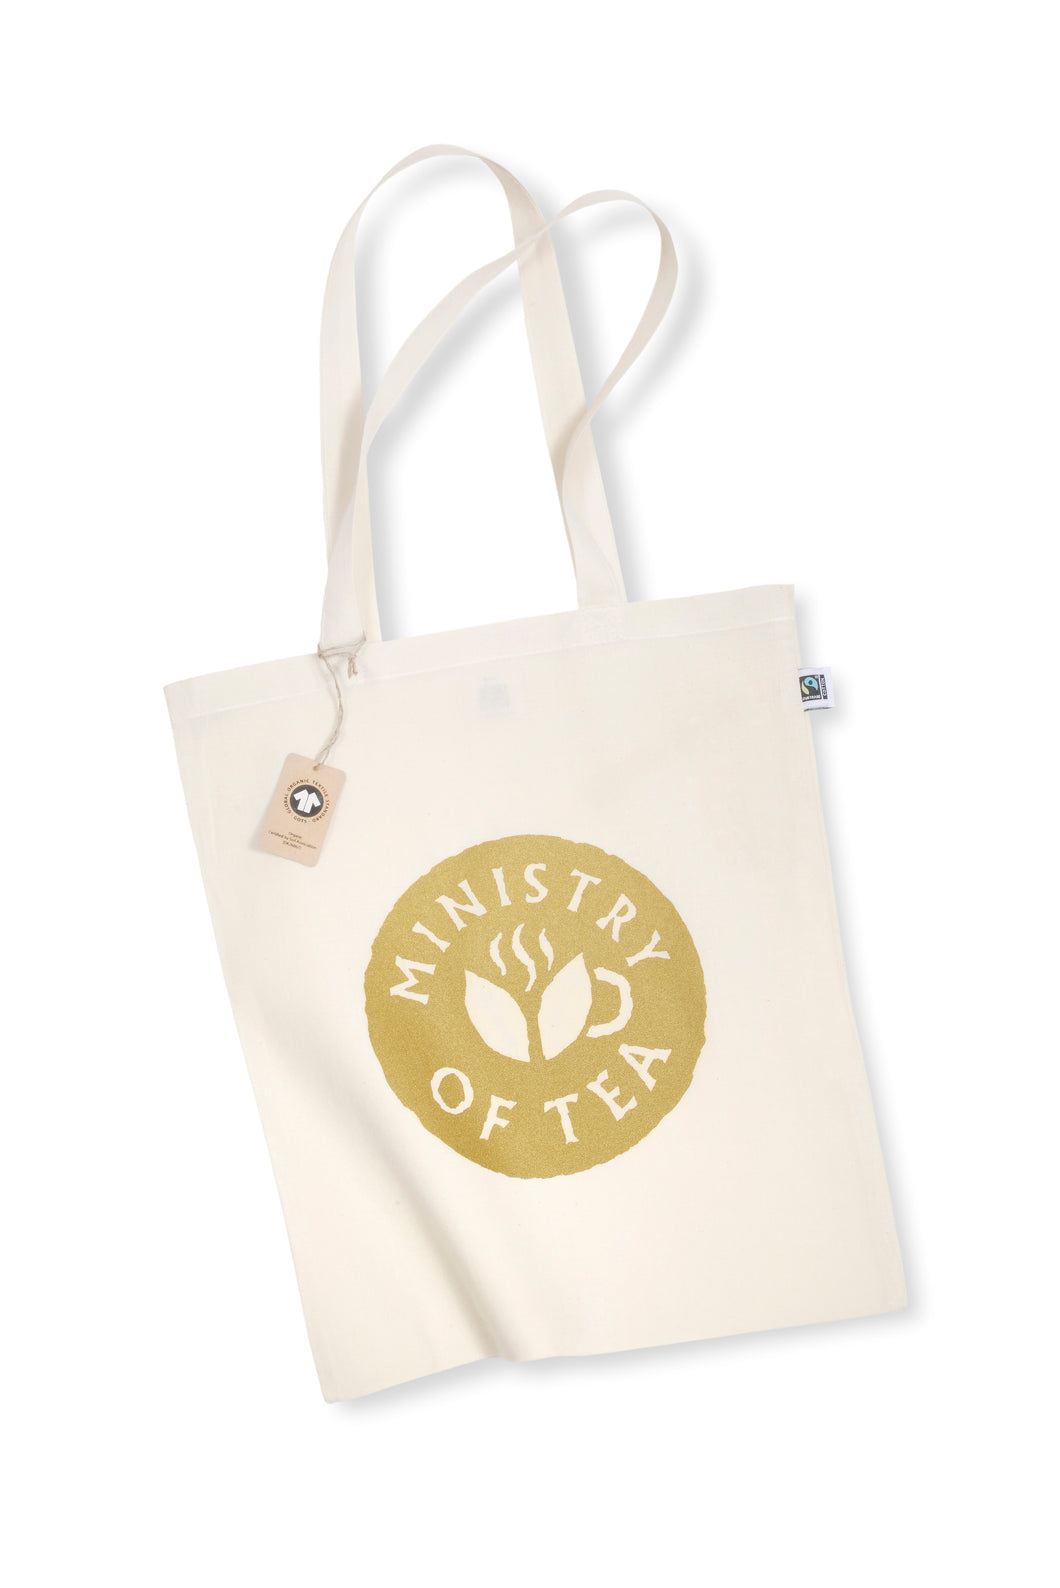 Organic Fairtrade Ministry of Tea Tote Bag